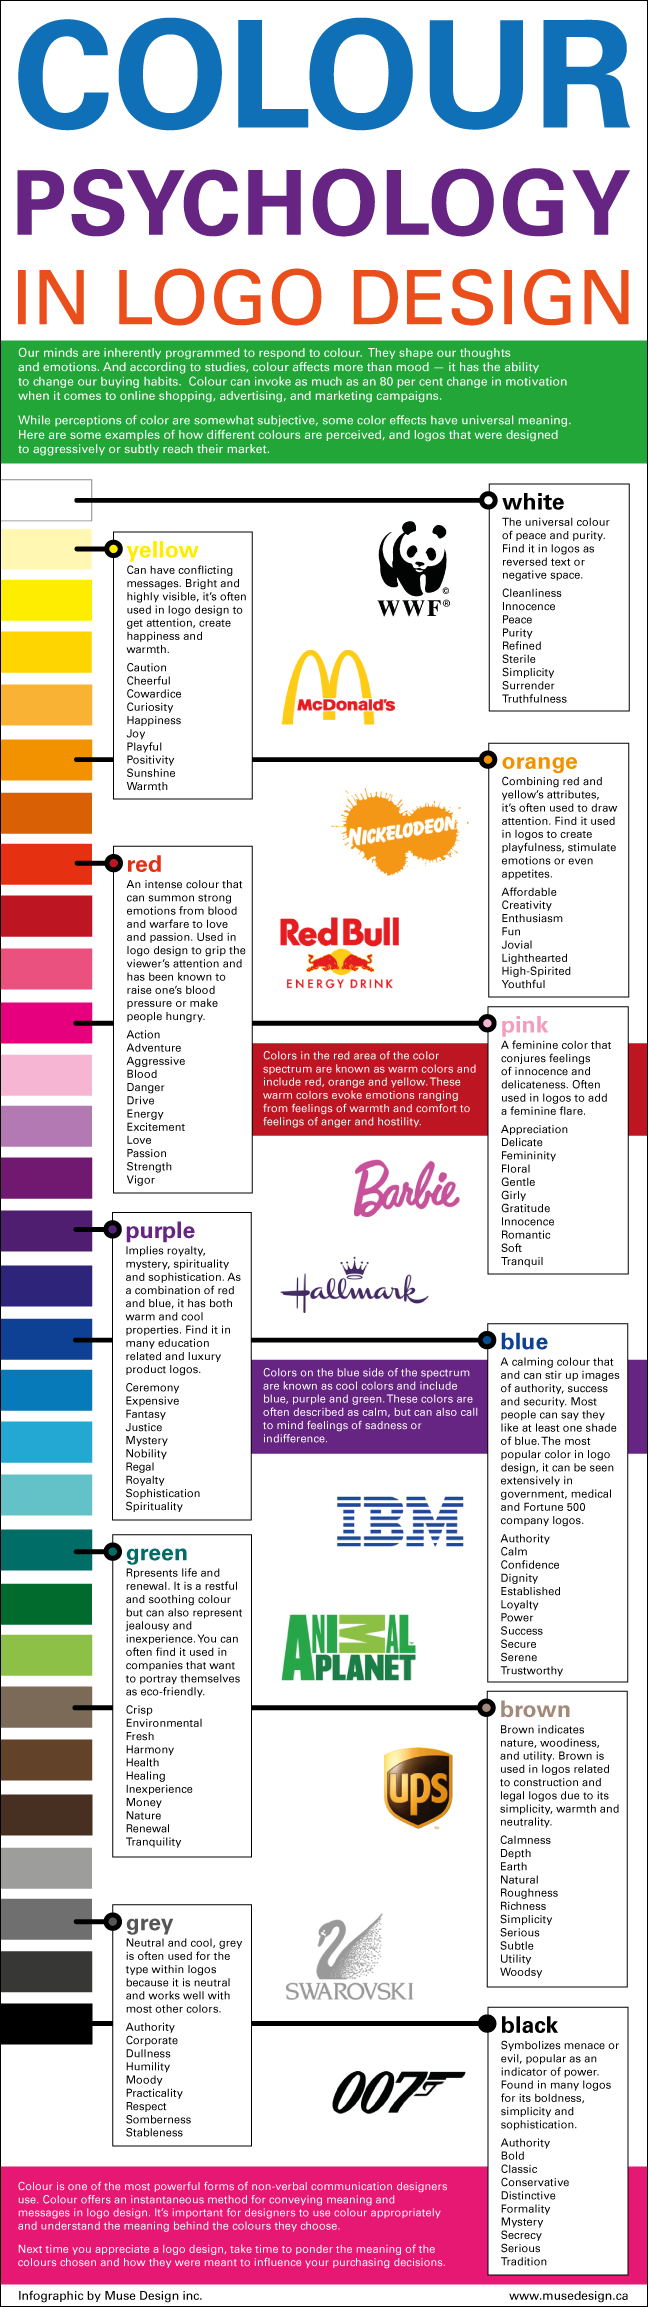 Color Psychology in Logo Design - Tingalls Graphic Design